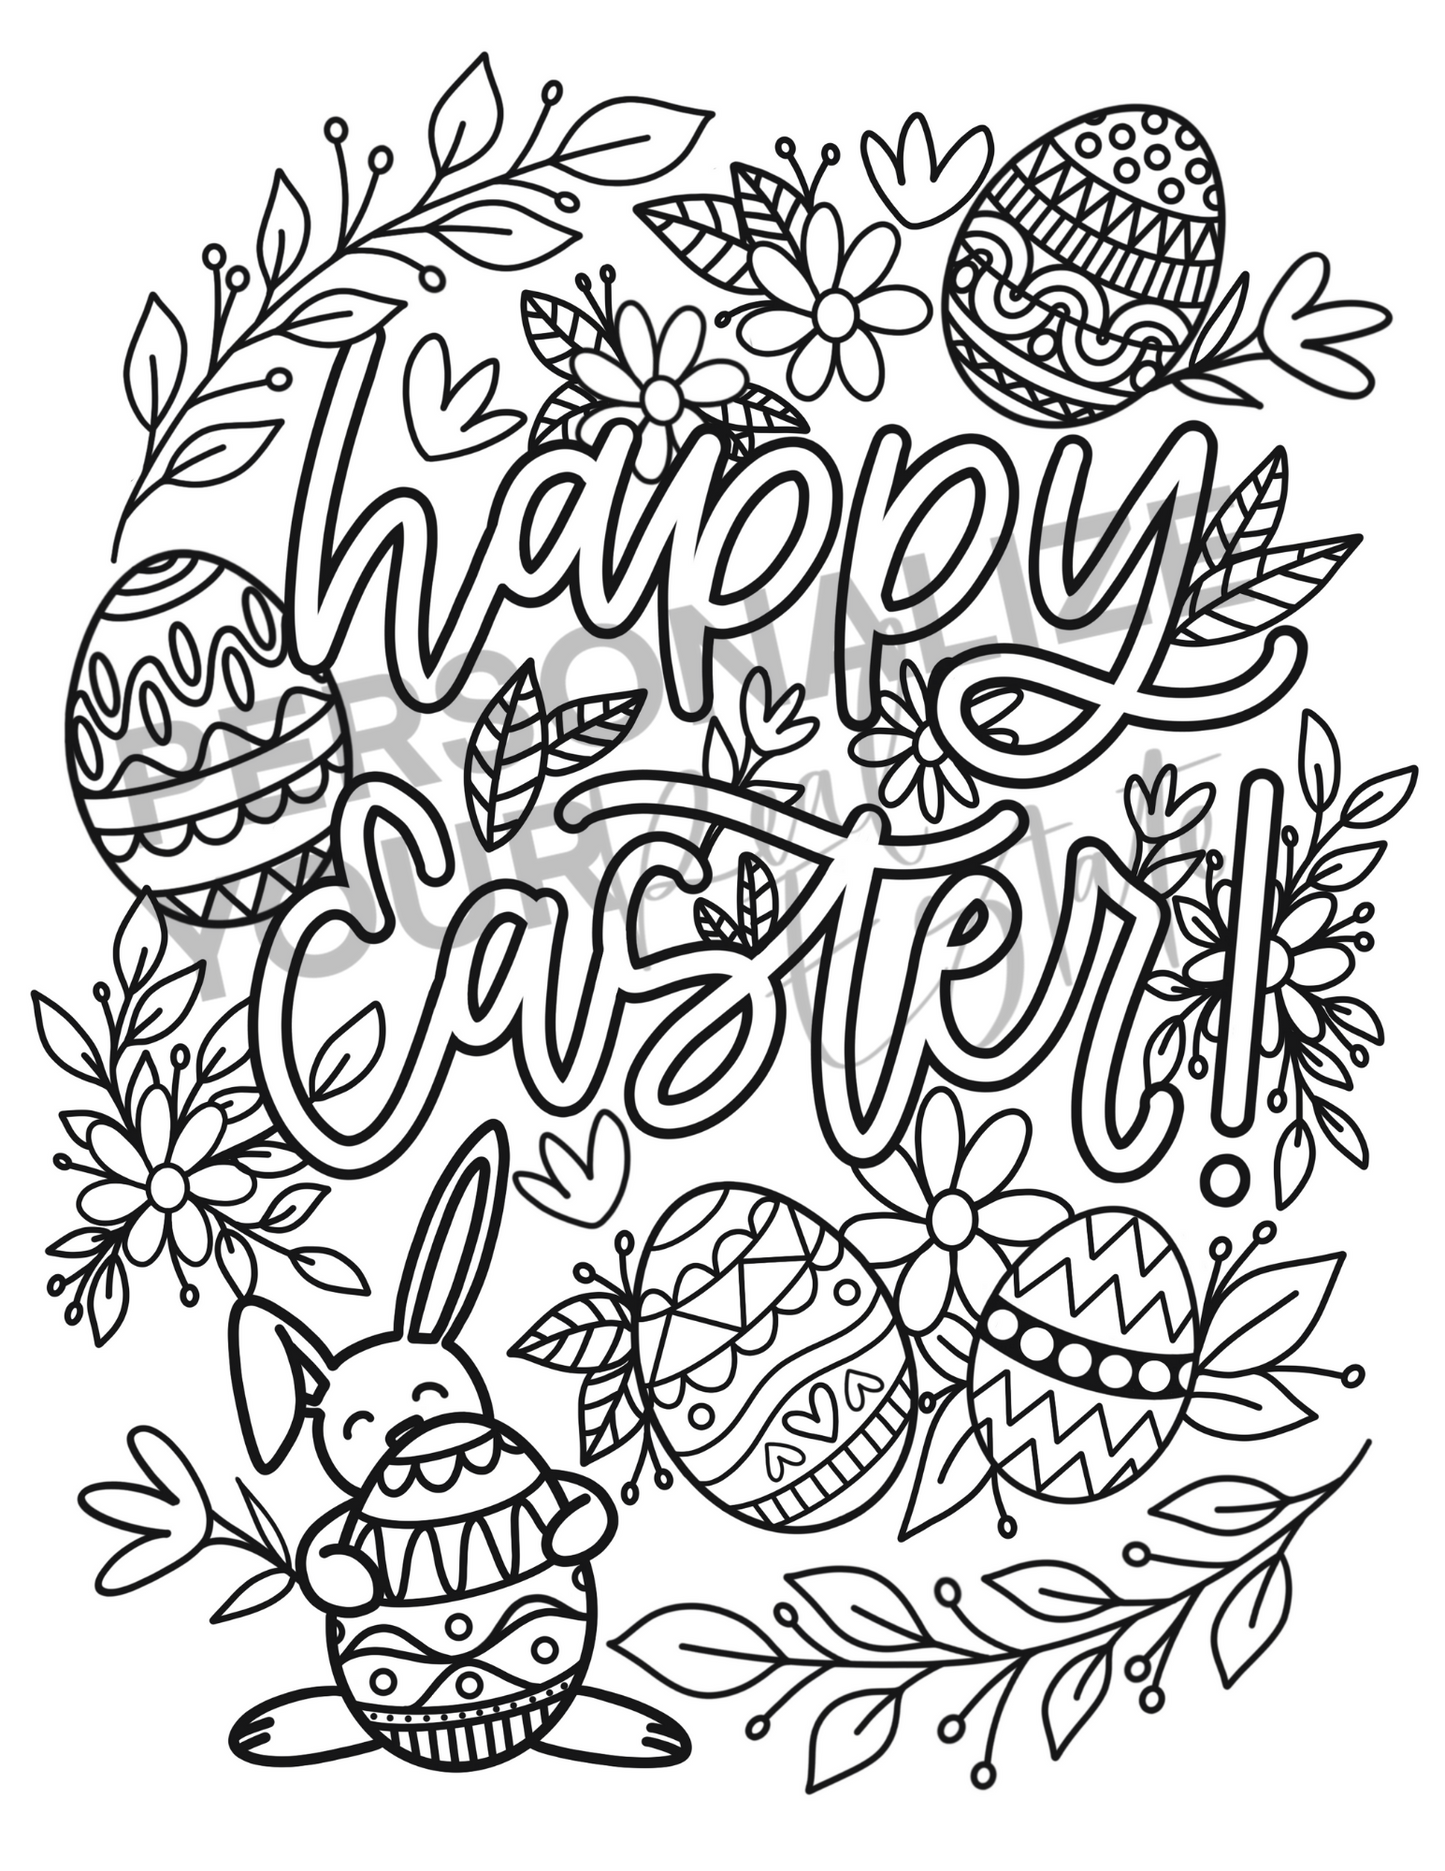 Happy Easter Coloring Sheet | FREEBIE